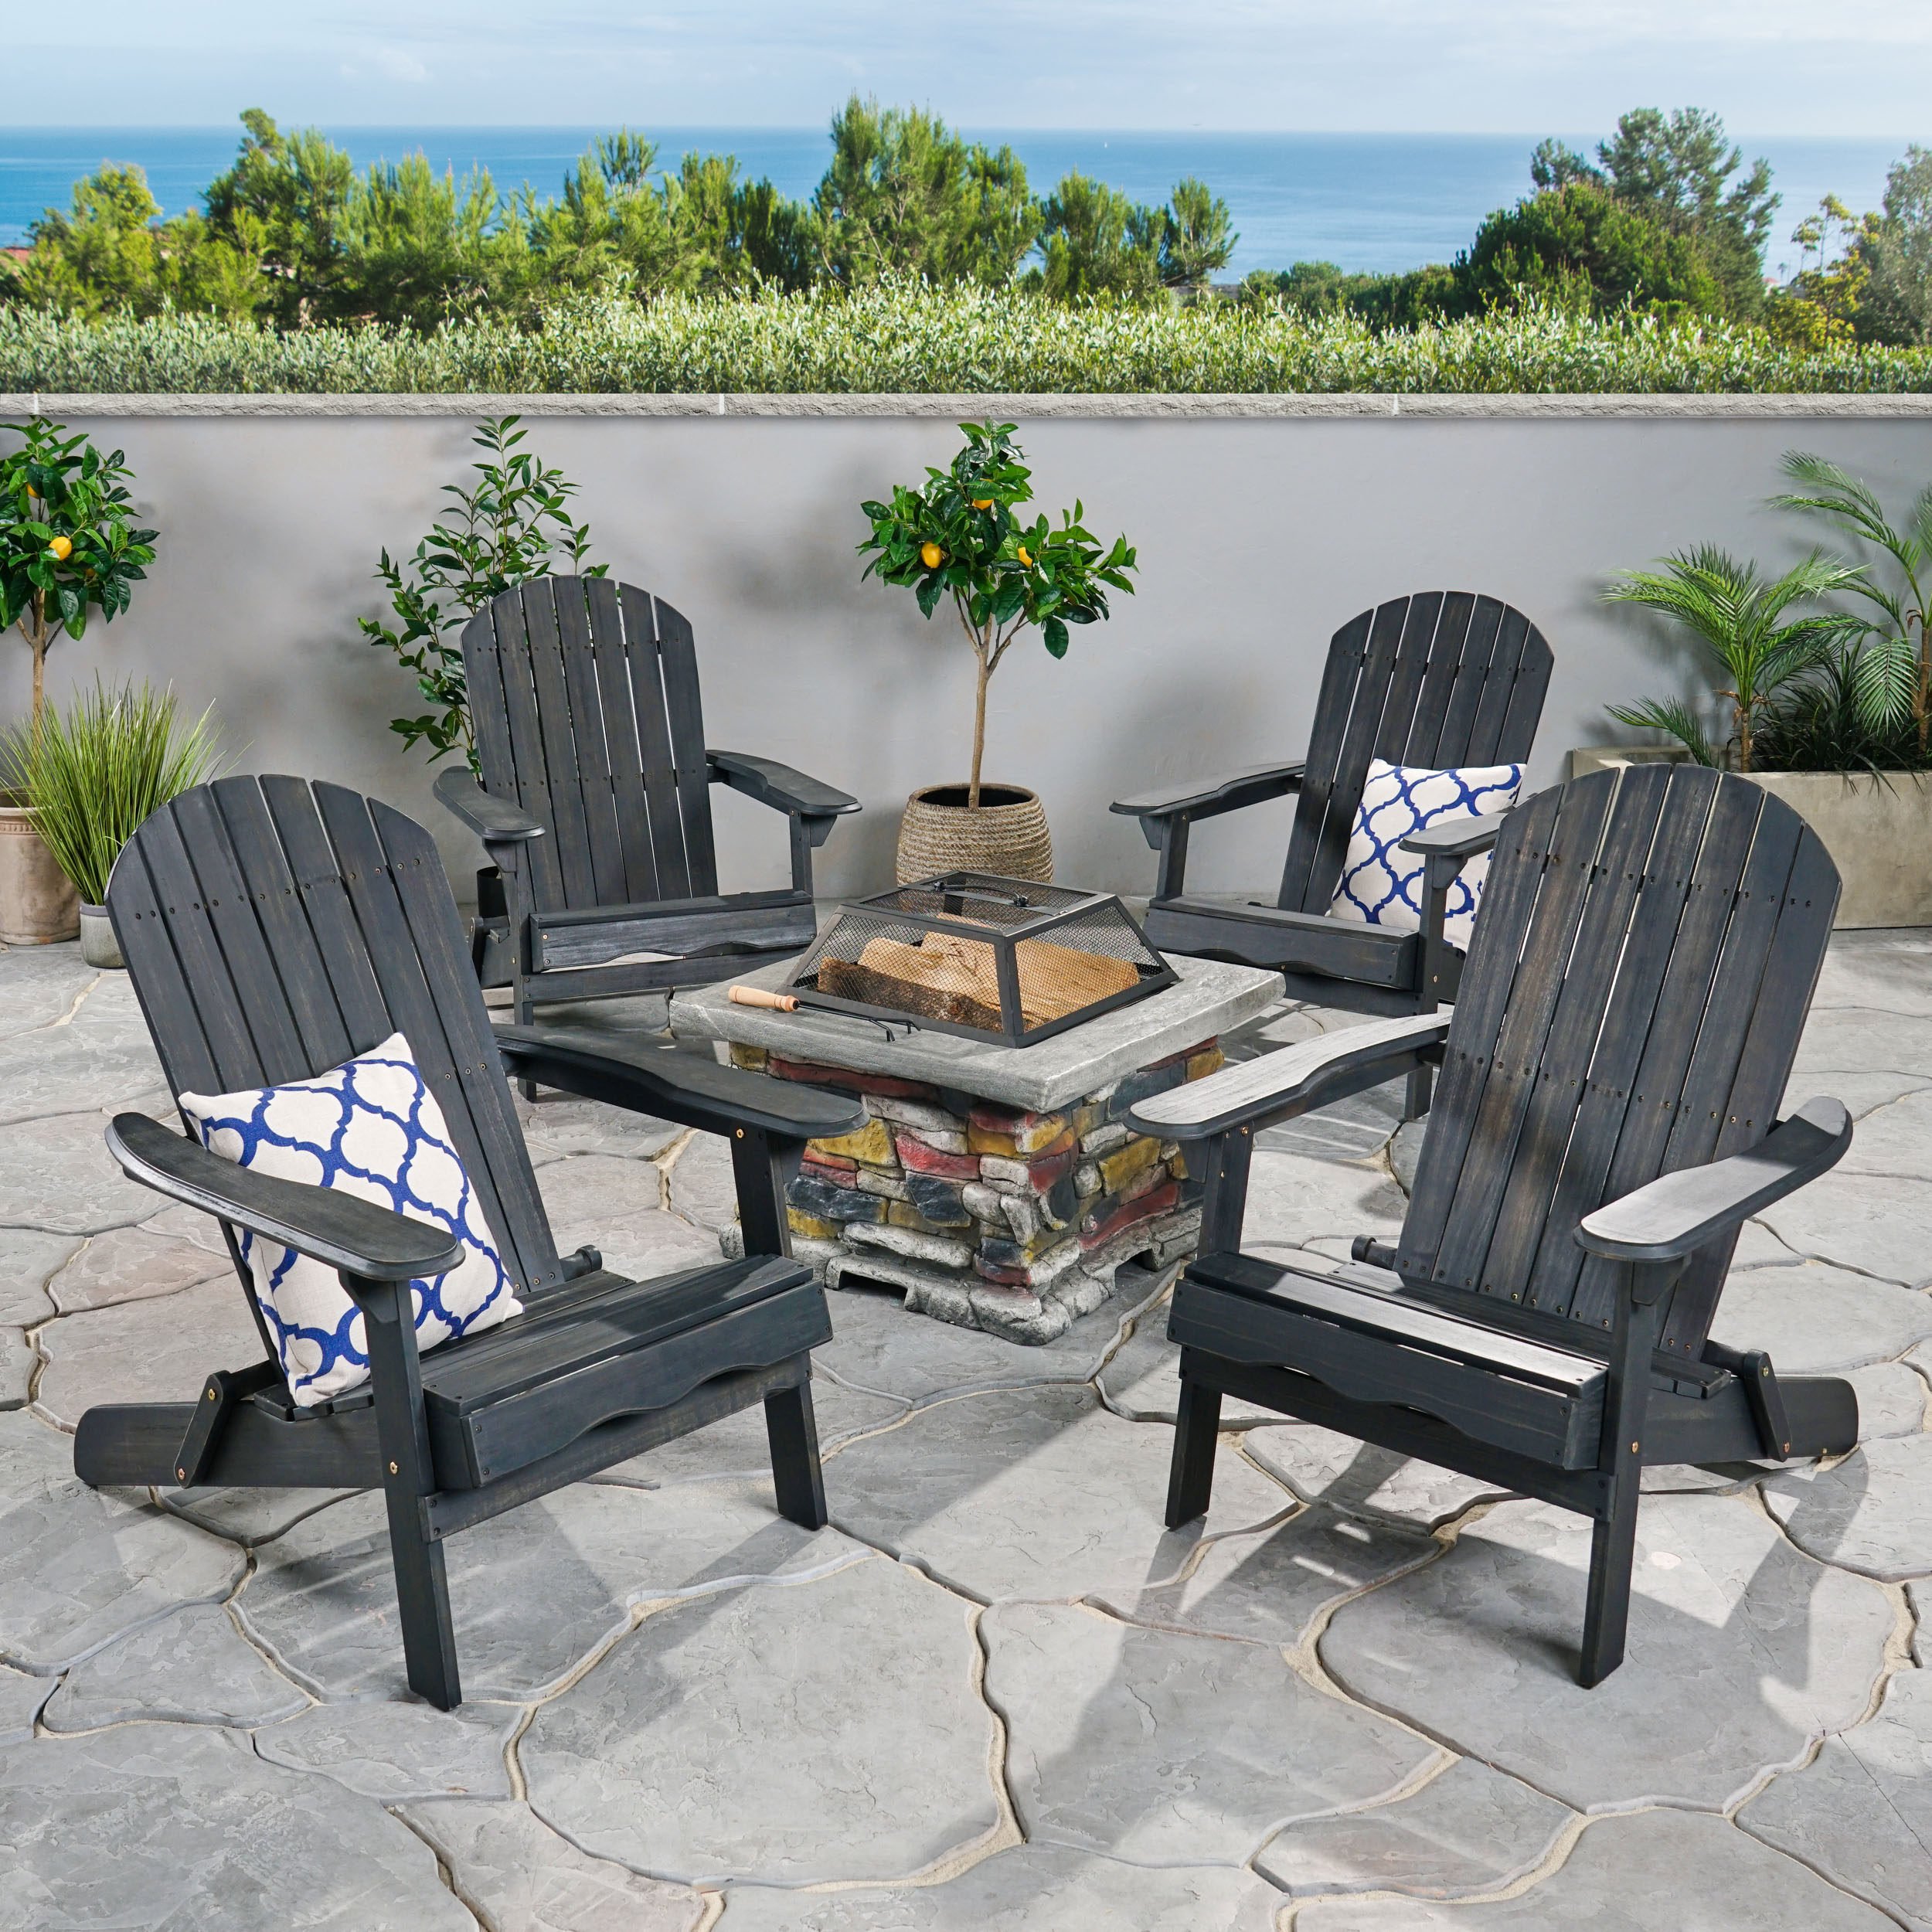 Benson Outdoor 5 Piece Acacia Wood/ Light Weight Concrete Adirondack Chair Set With Fire Pit - Dark Grey